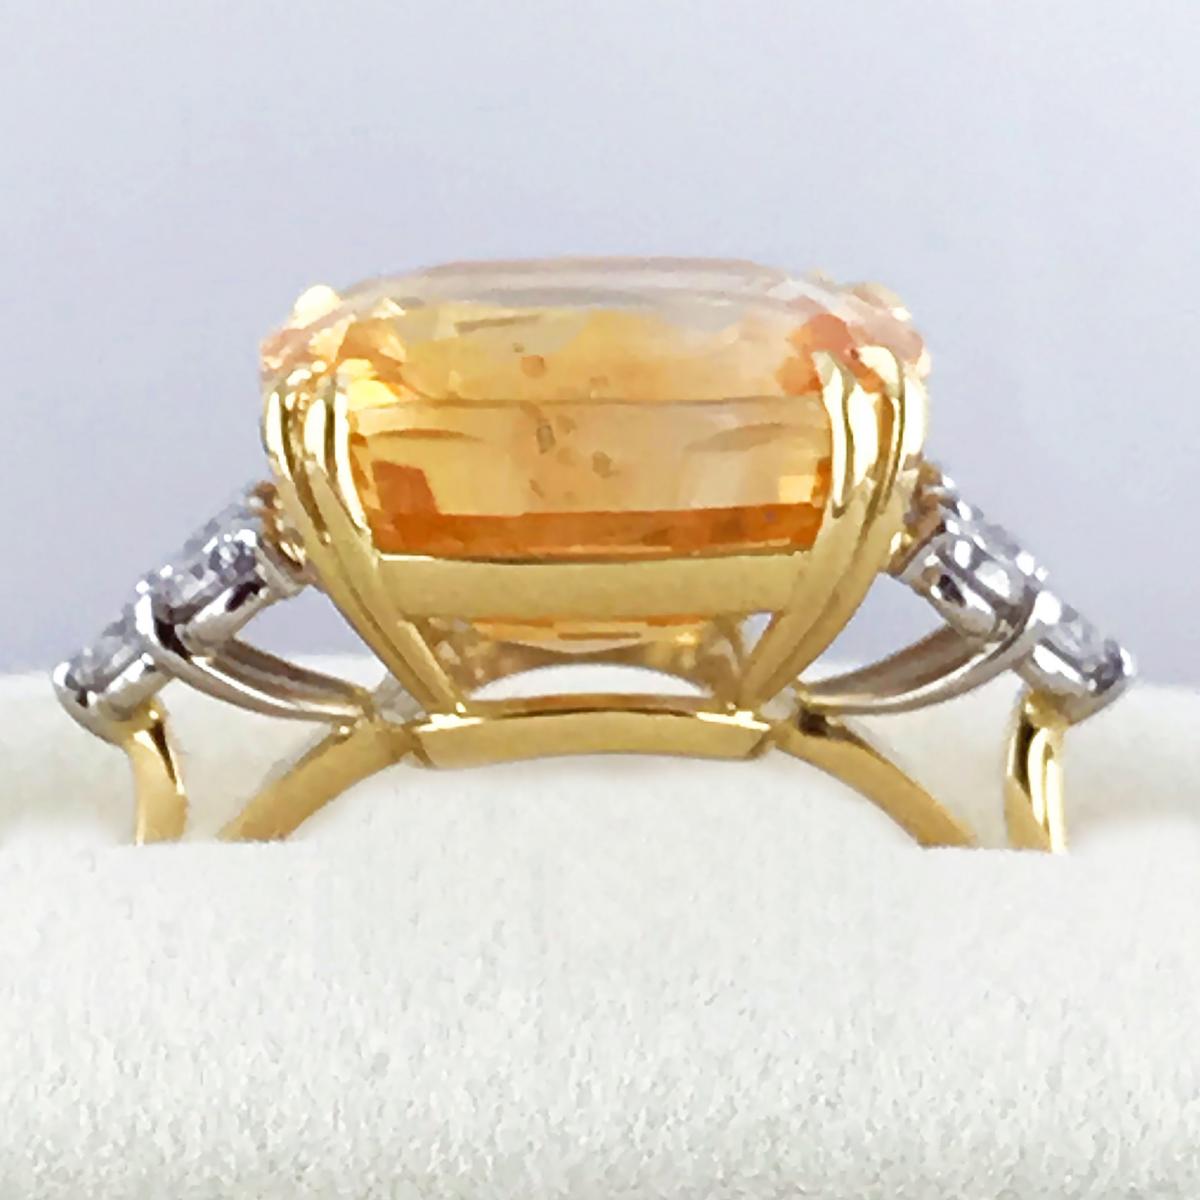 13.5 Carat Cushion Cut Certified Untreated Orange Sapphire Ring